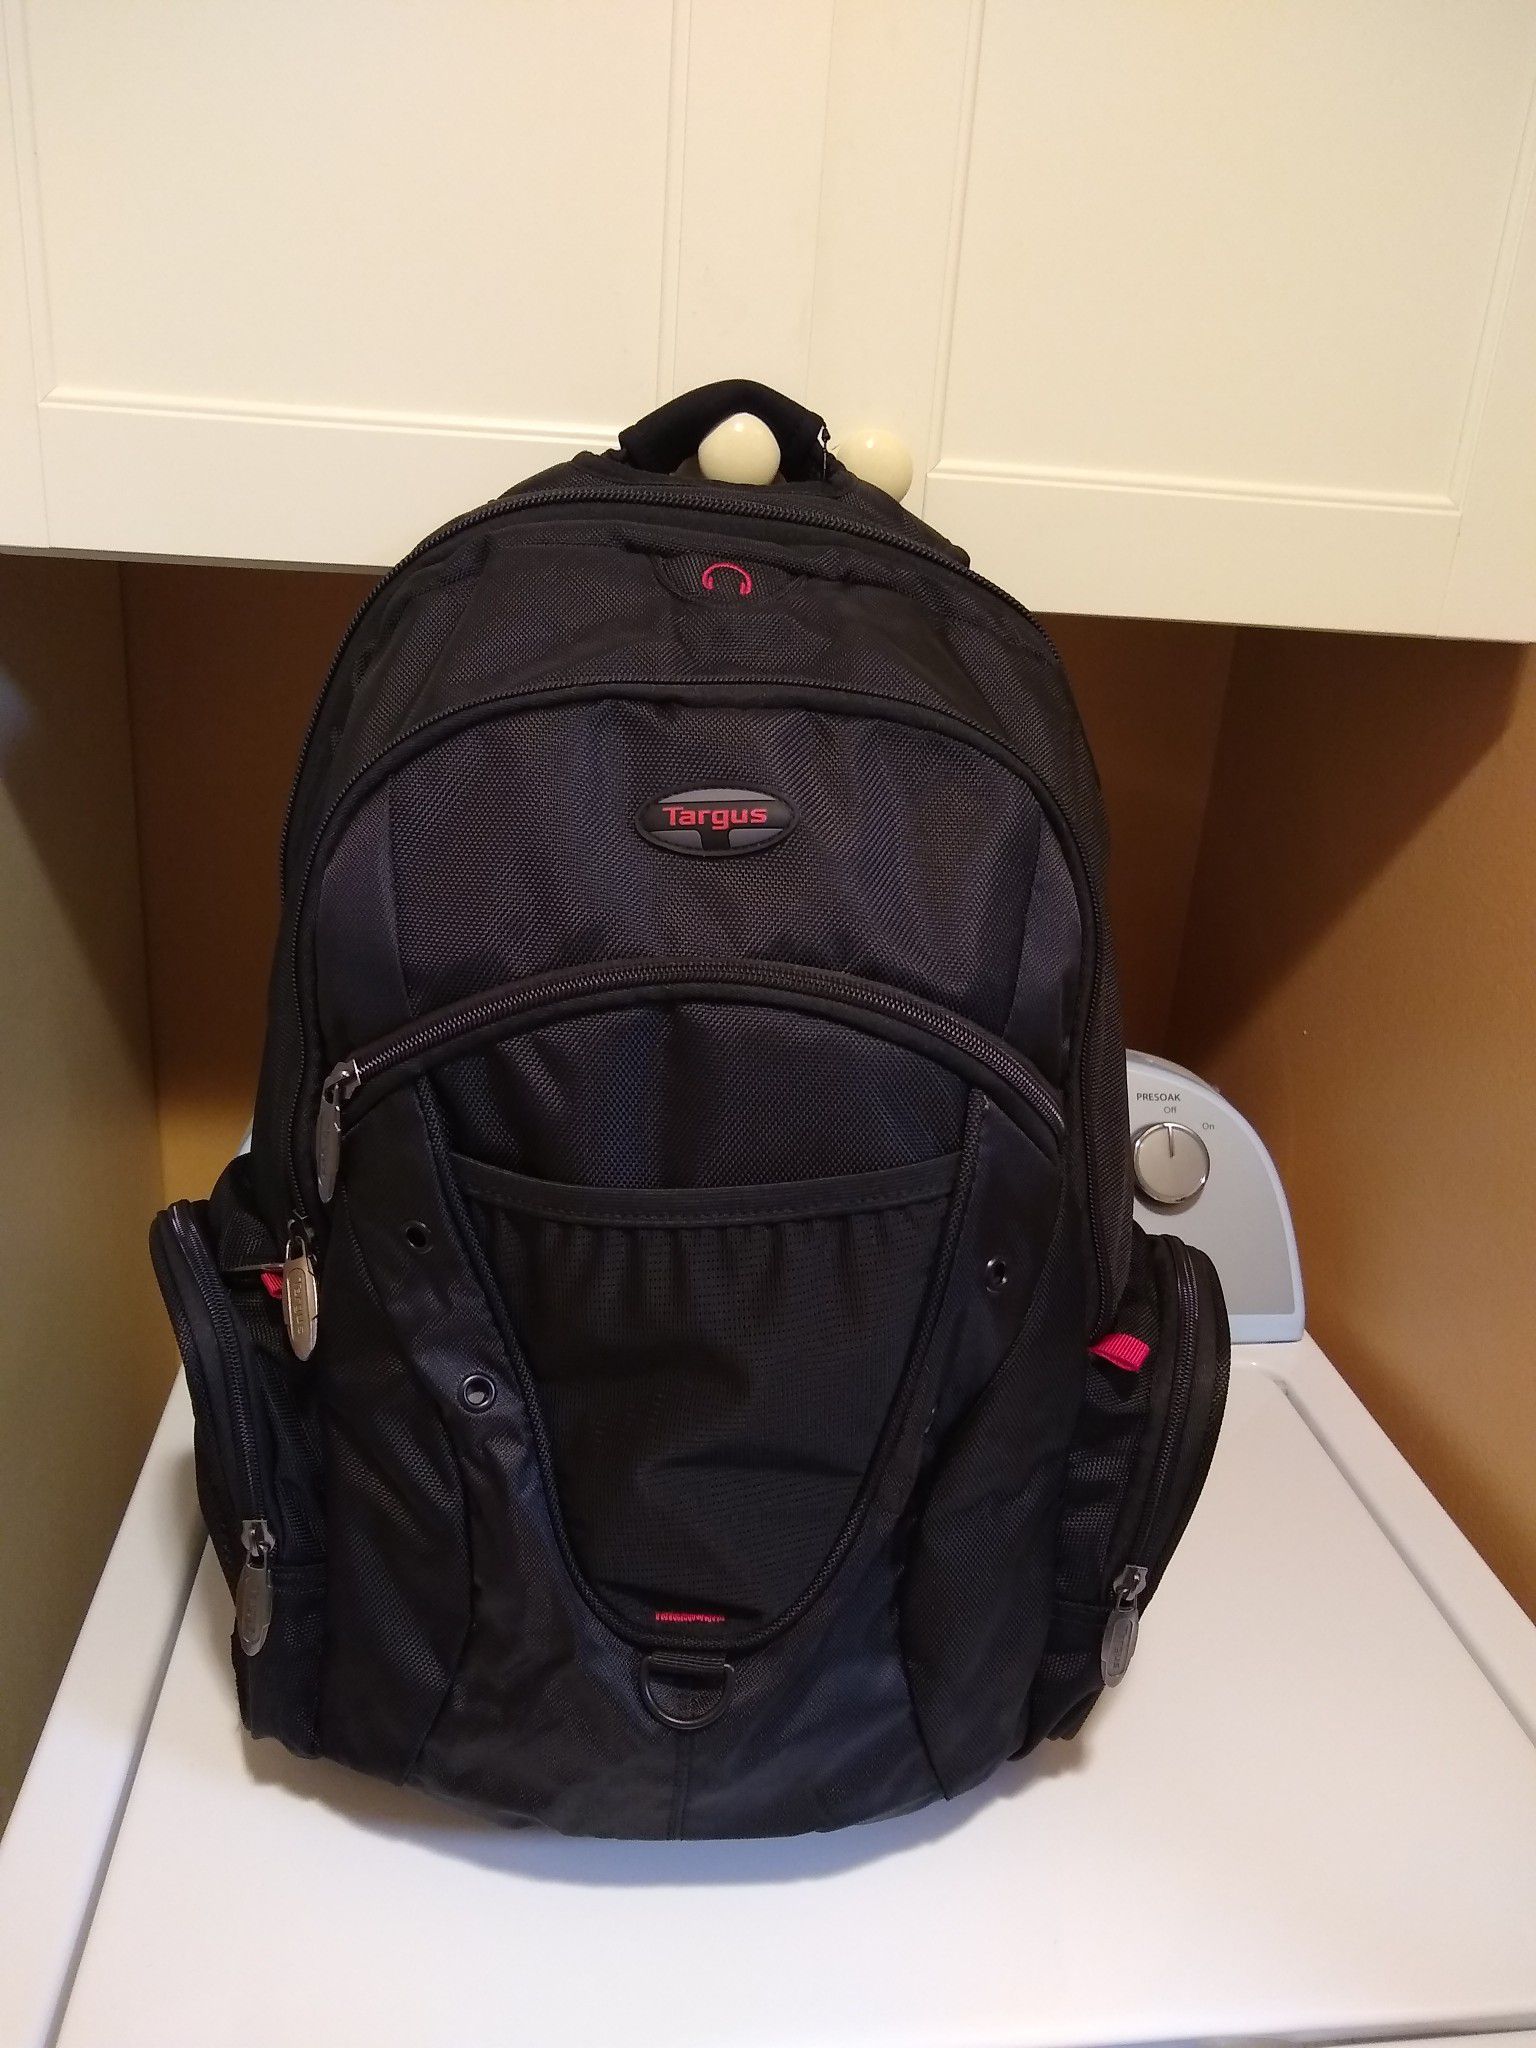 Tragus laptop backpack